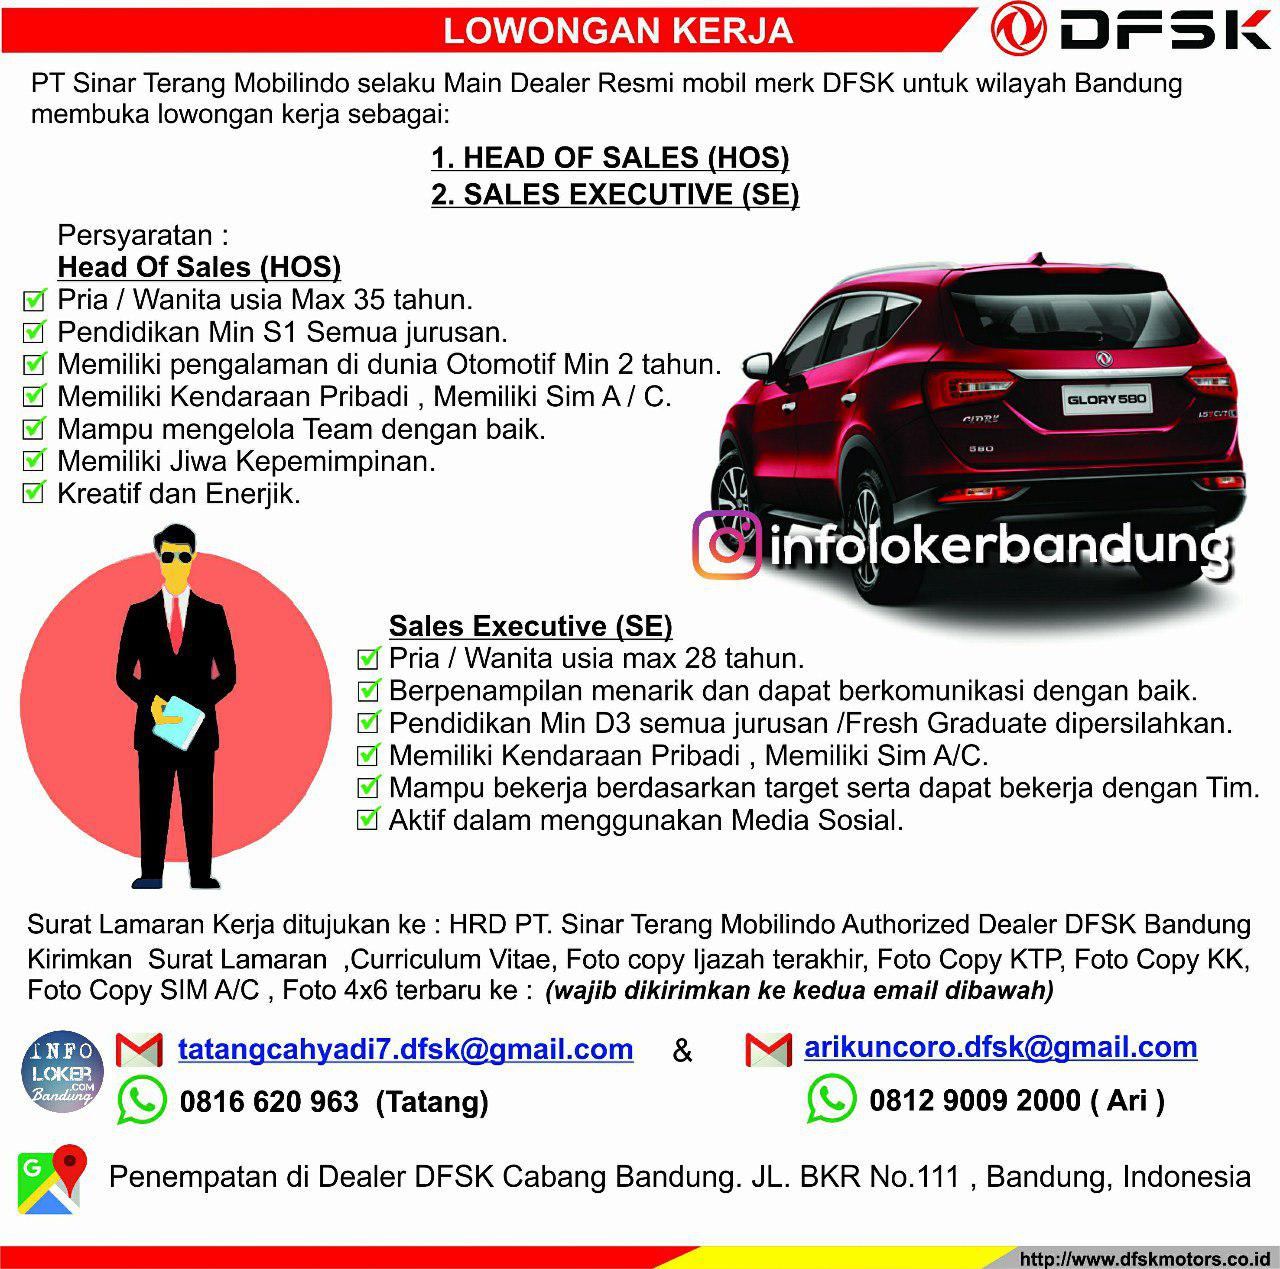 Lowongan Kerja PT. Sinar Terang Mobilindo ( DFSK Mobil ) Bandung Agustus 2018 - infolokerbandung.com